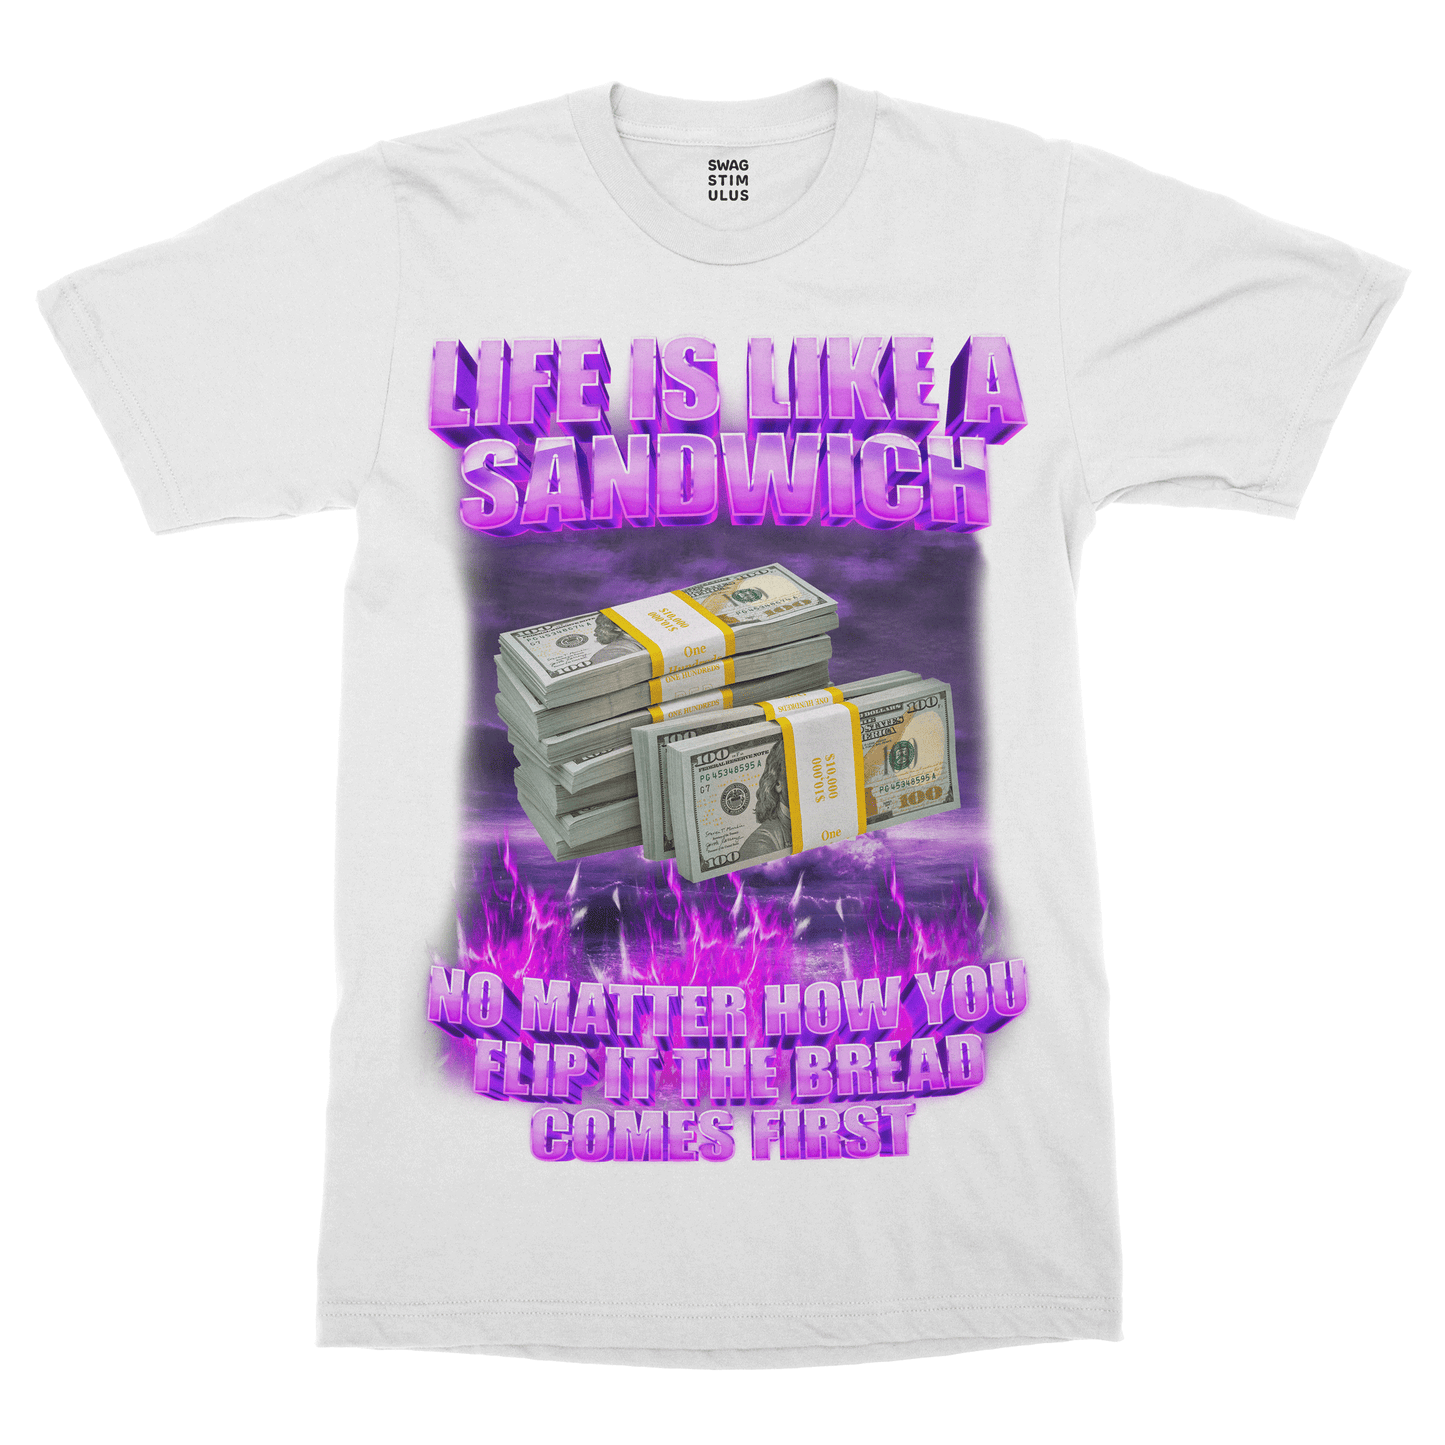 Life If Like a Sandwich T-Shirt